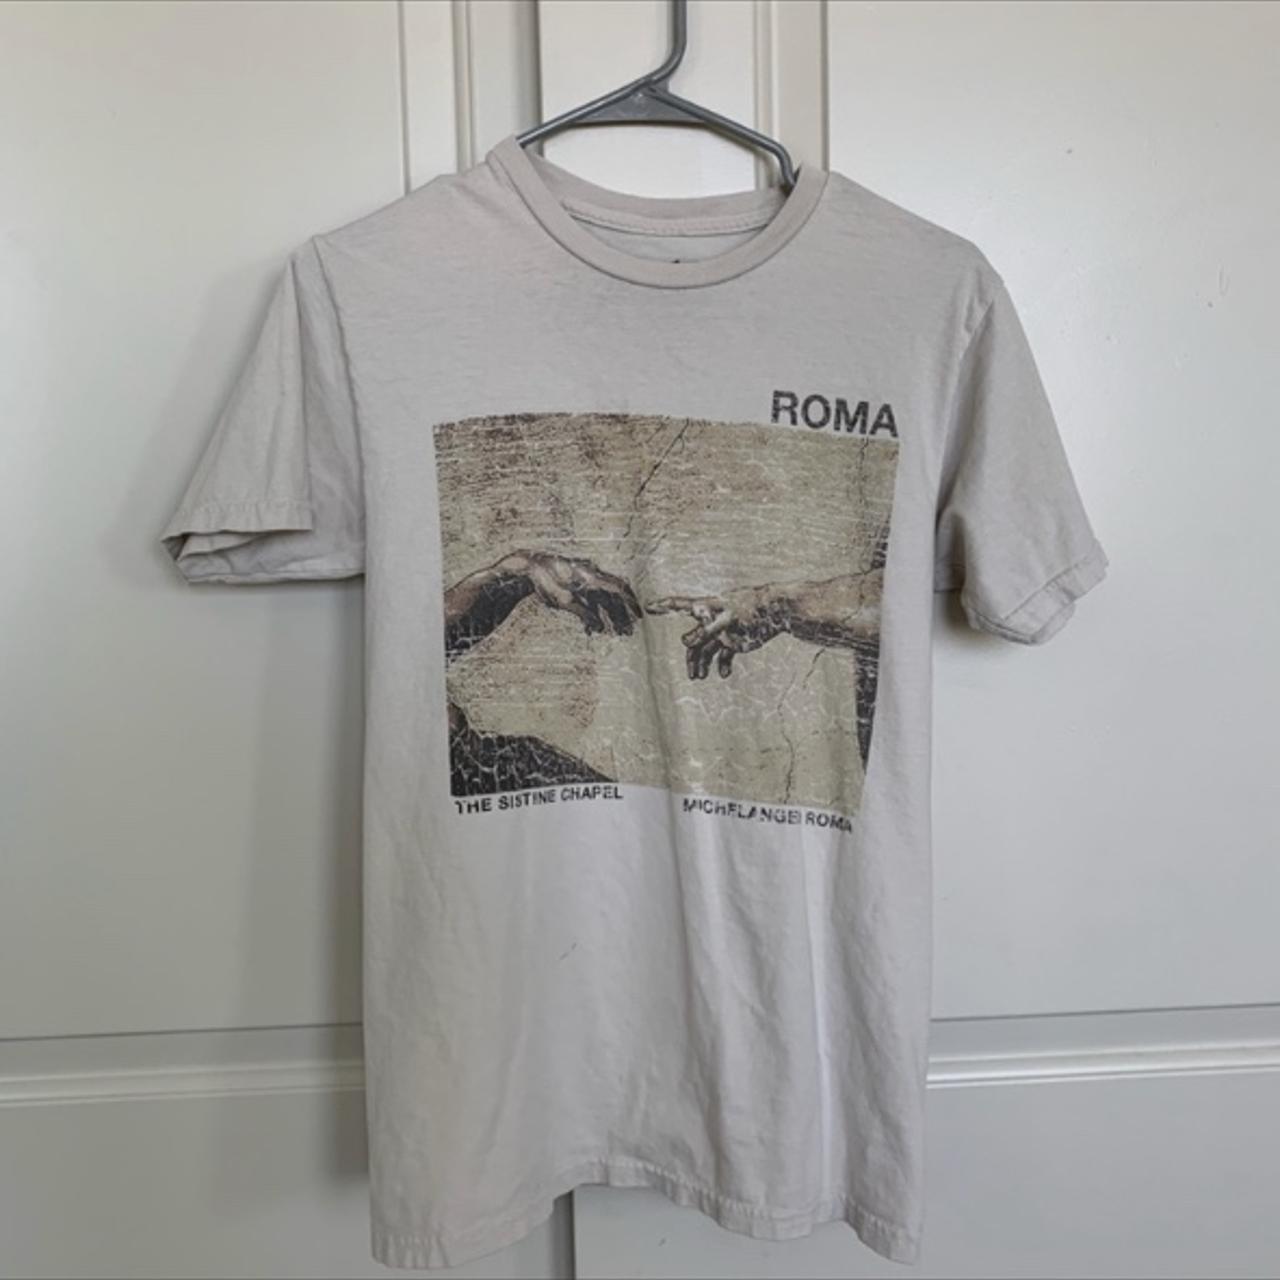 PacSun : Roma T-Shirt  Rad tee, Shirts, Graphic tees